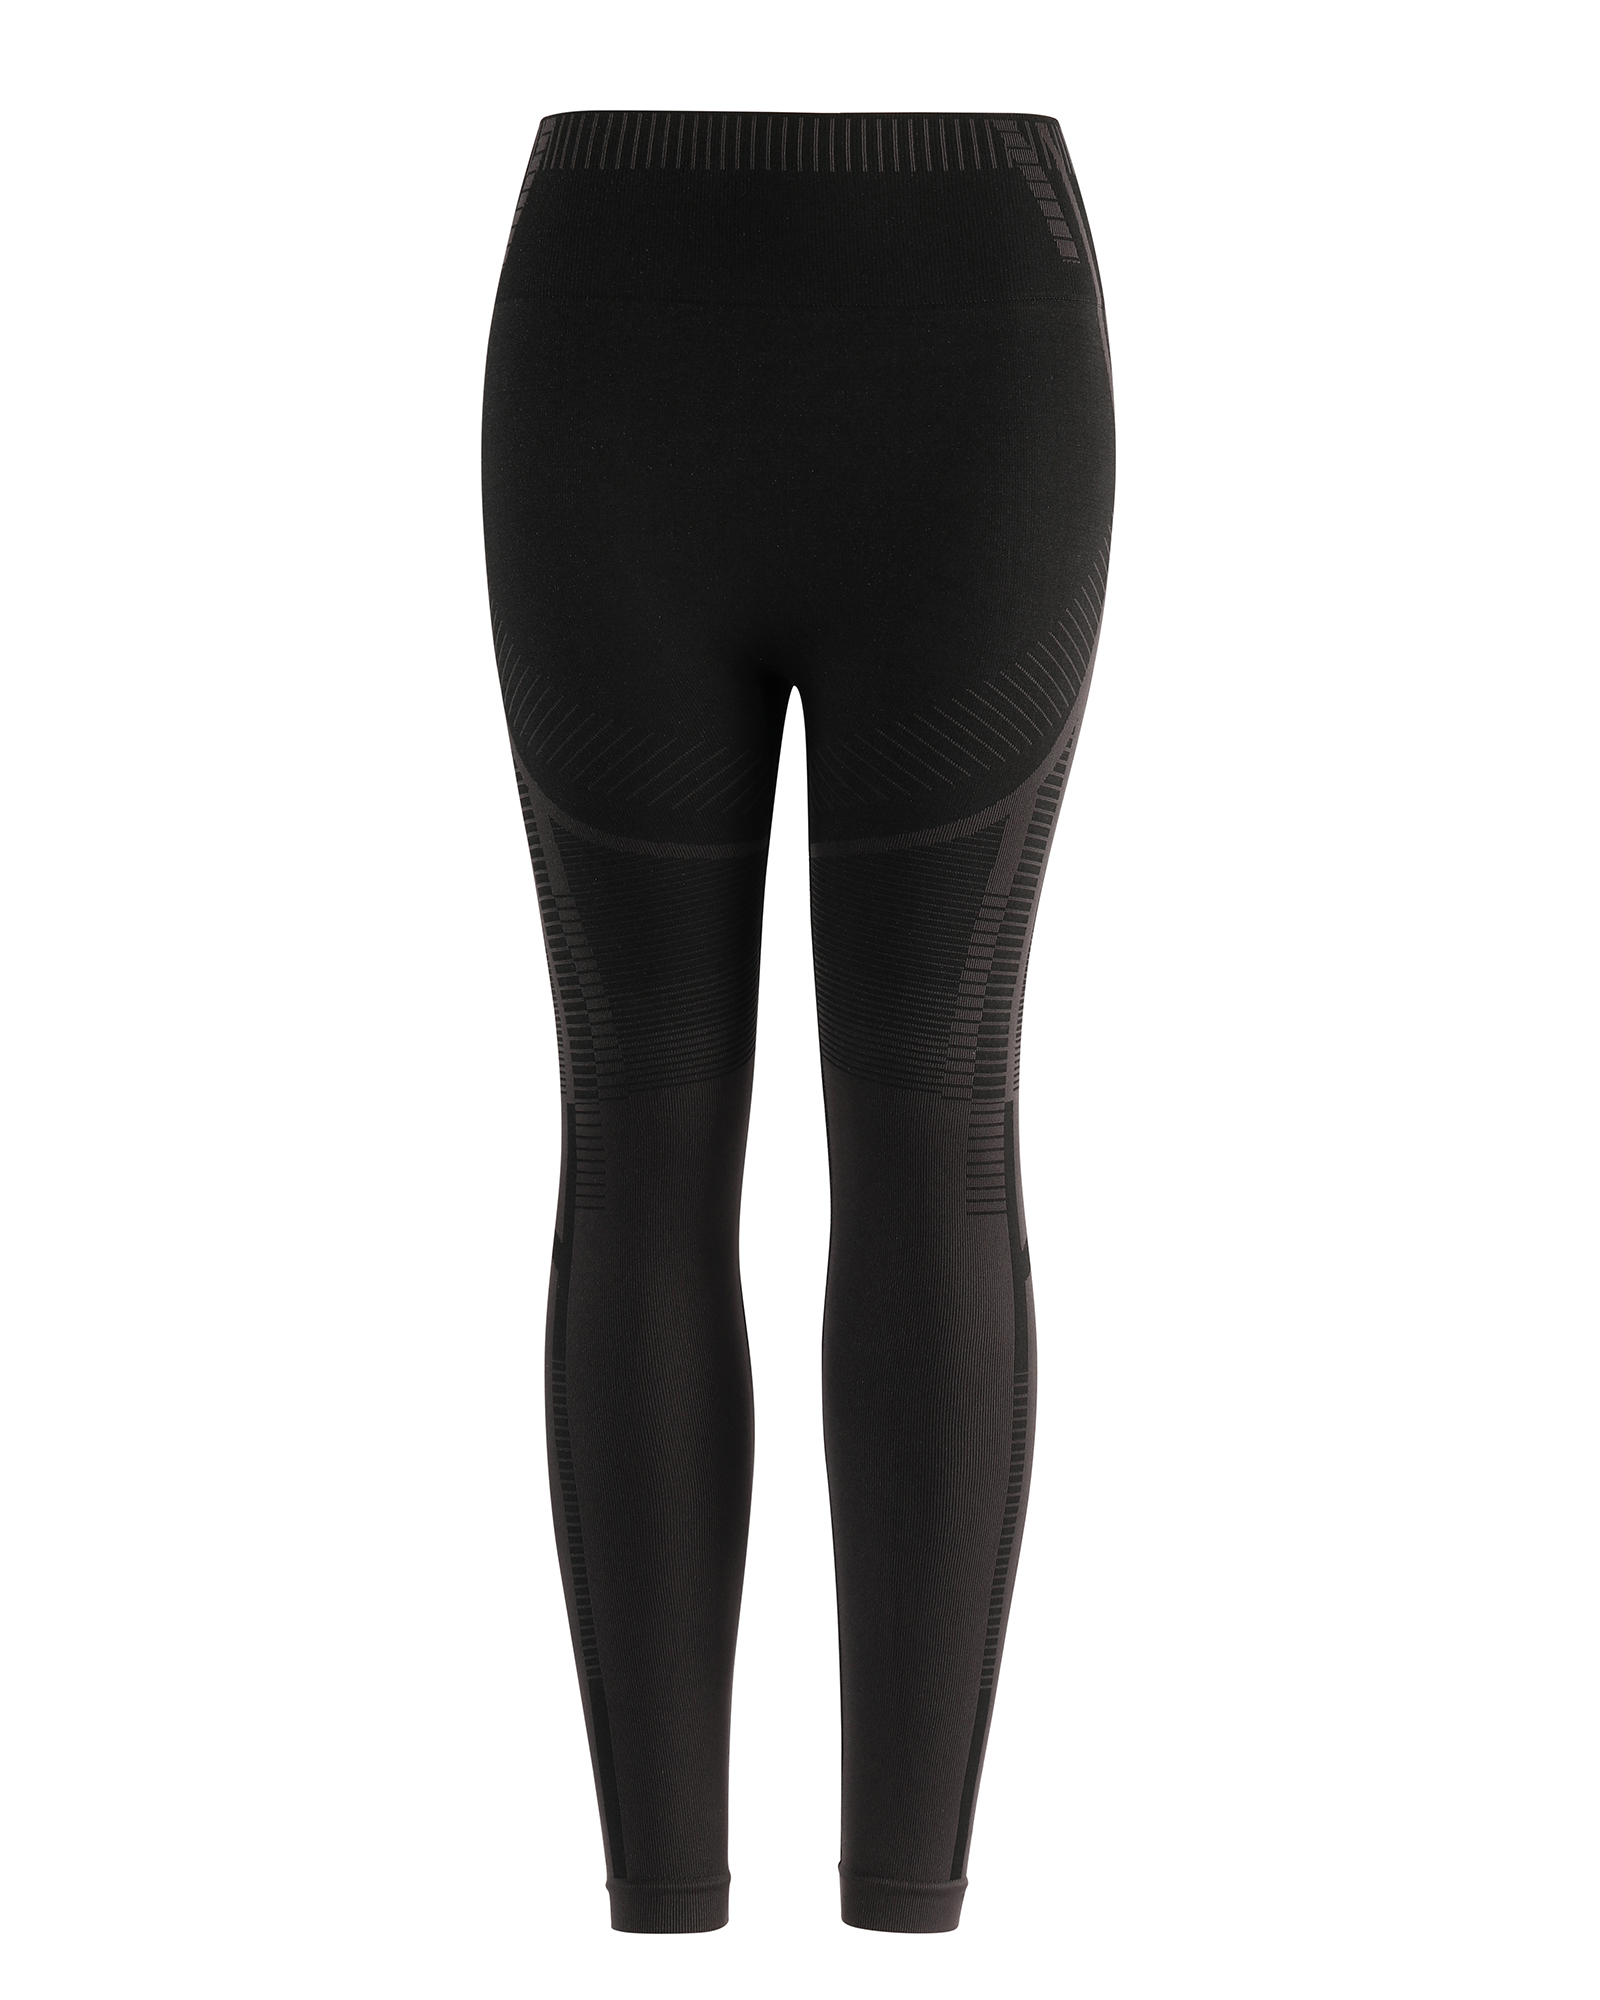 TLF Apparel Women's Workout Edie Legging Pants, Black, Large : Buy Online  at Best Price in KSA - Souq is now : Fashion